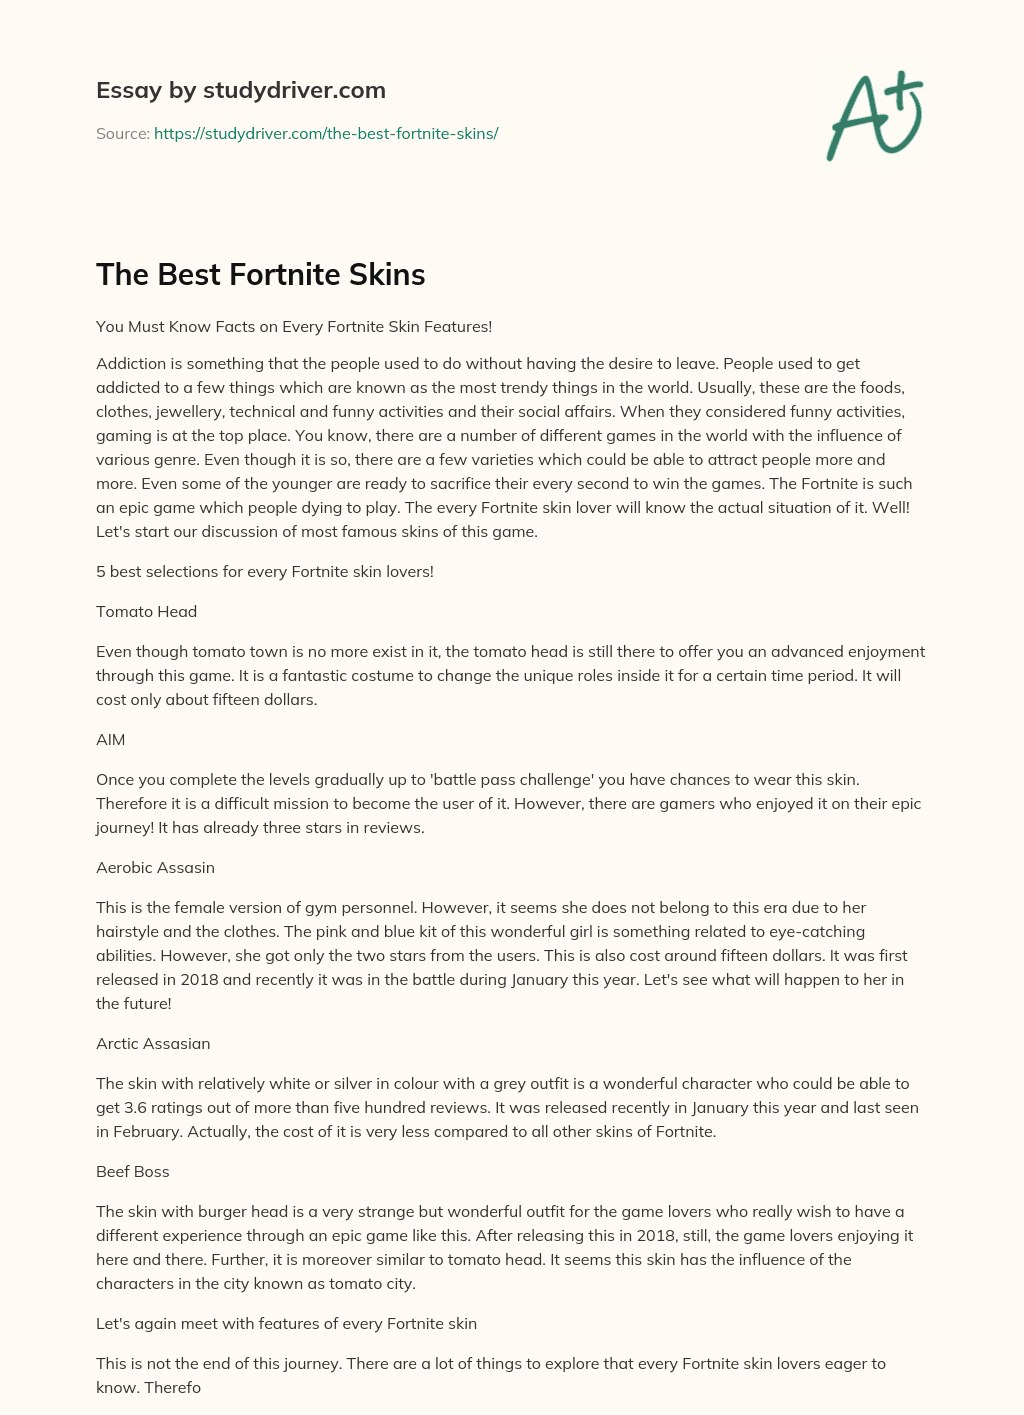 The Best Fortnite Skins essay